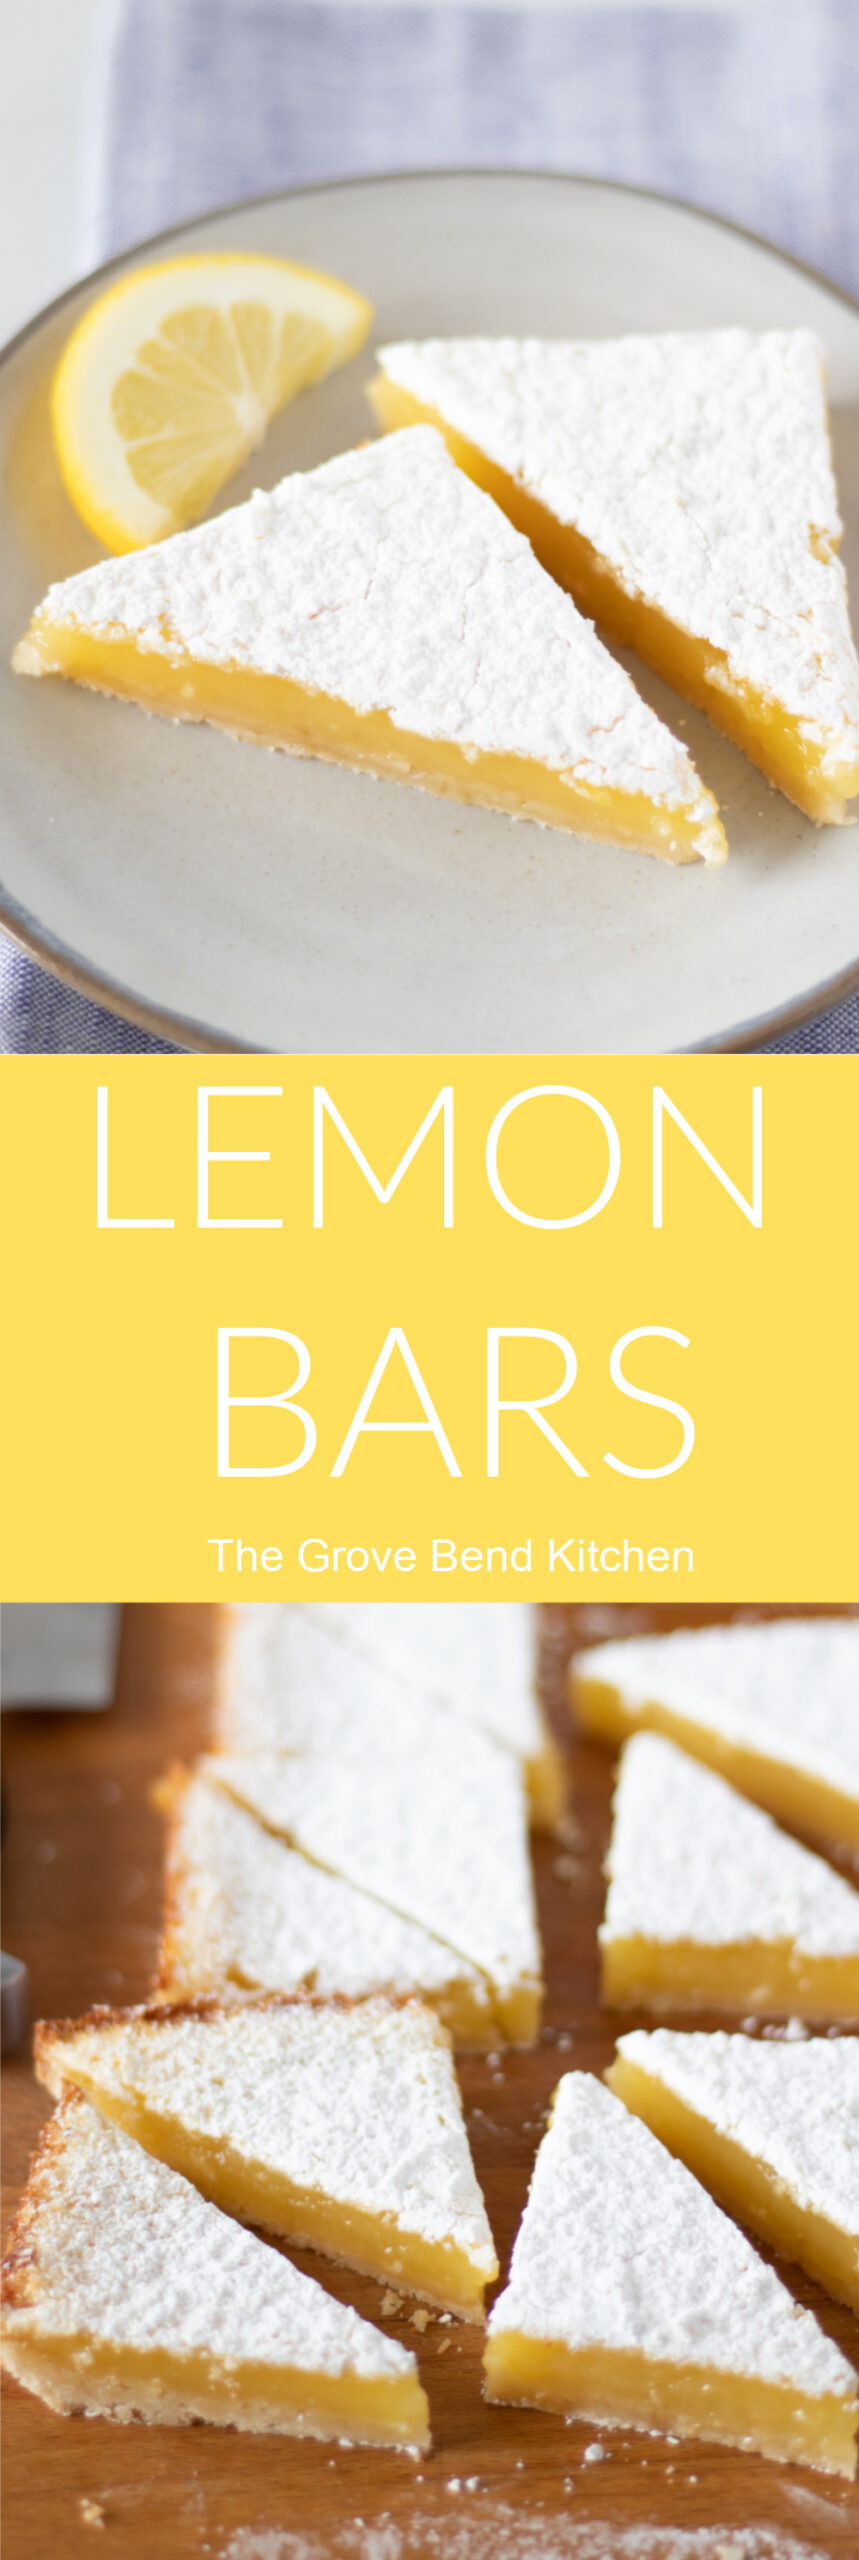 Lemon Bars - The Grove Bend Kitchen